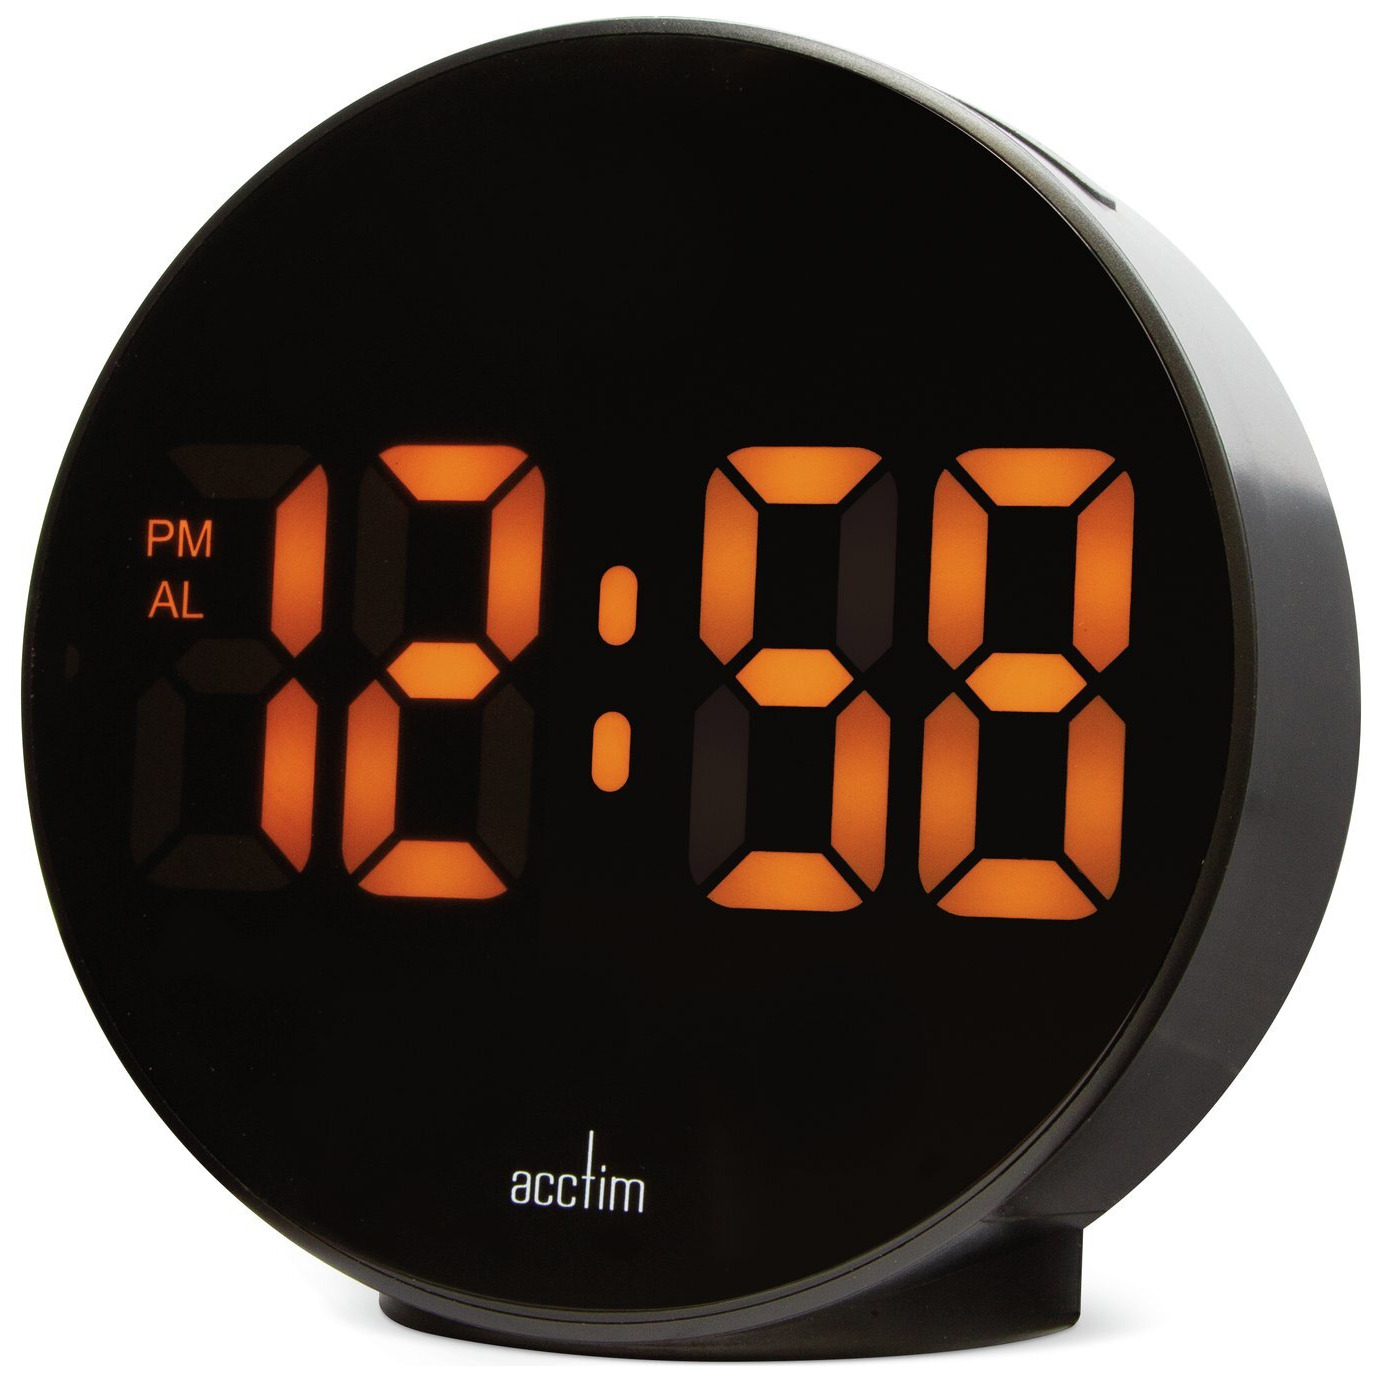 Acctim Circulo Digital LED Alarm Clock - Black & Orange - image 1